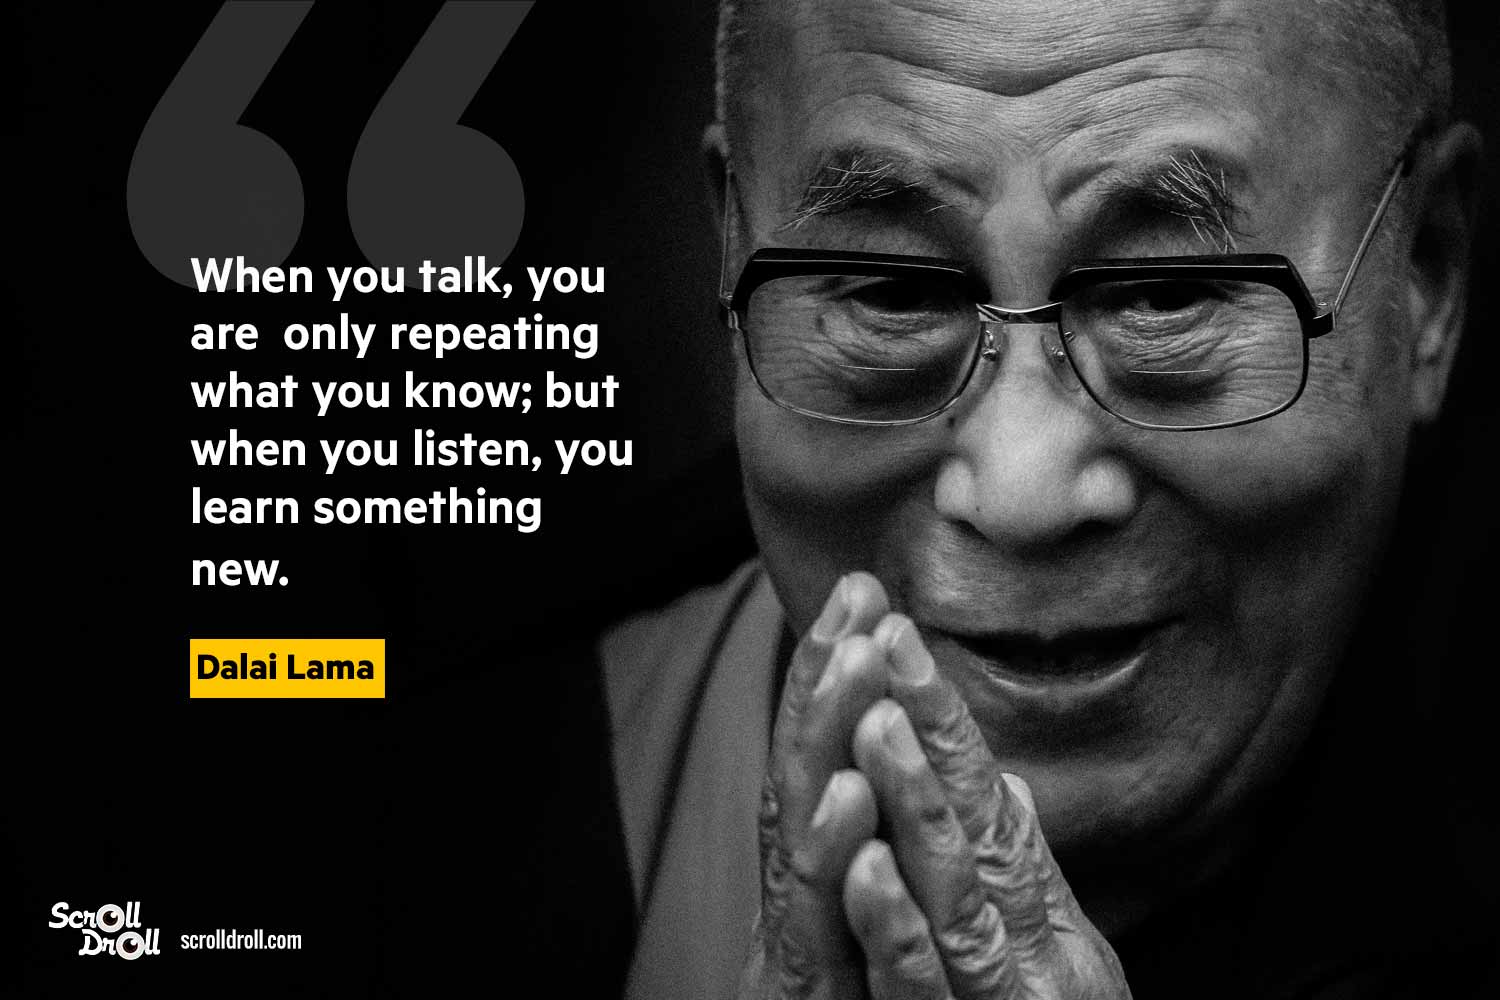 Dalai Lama Quotes (2)